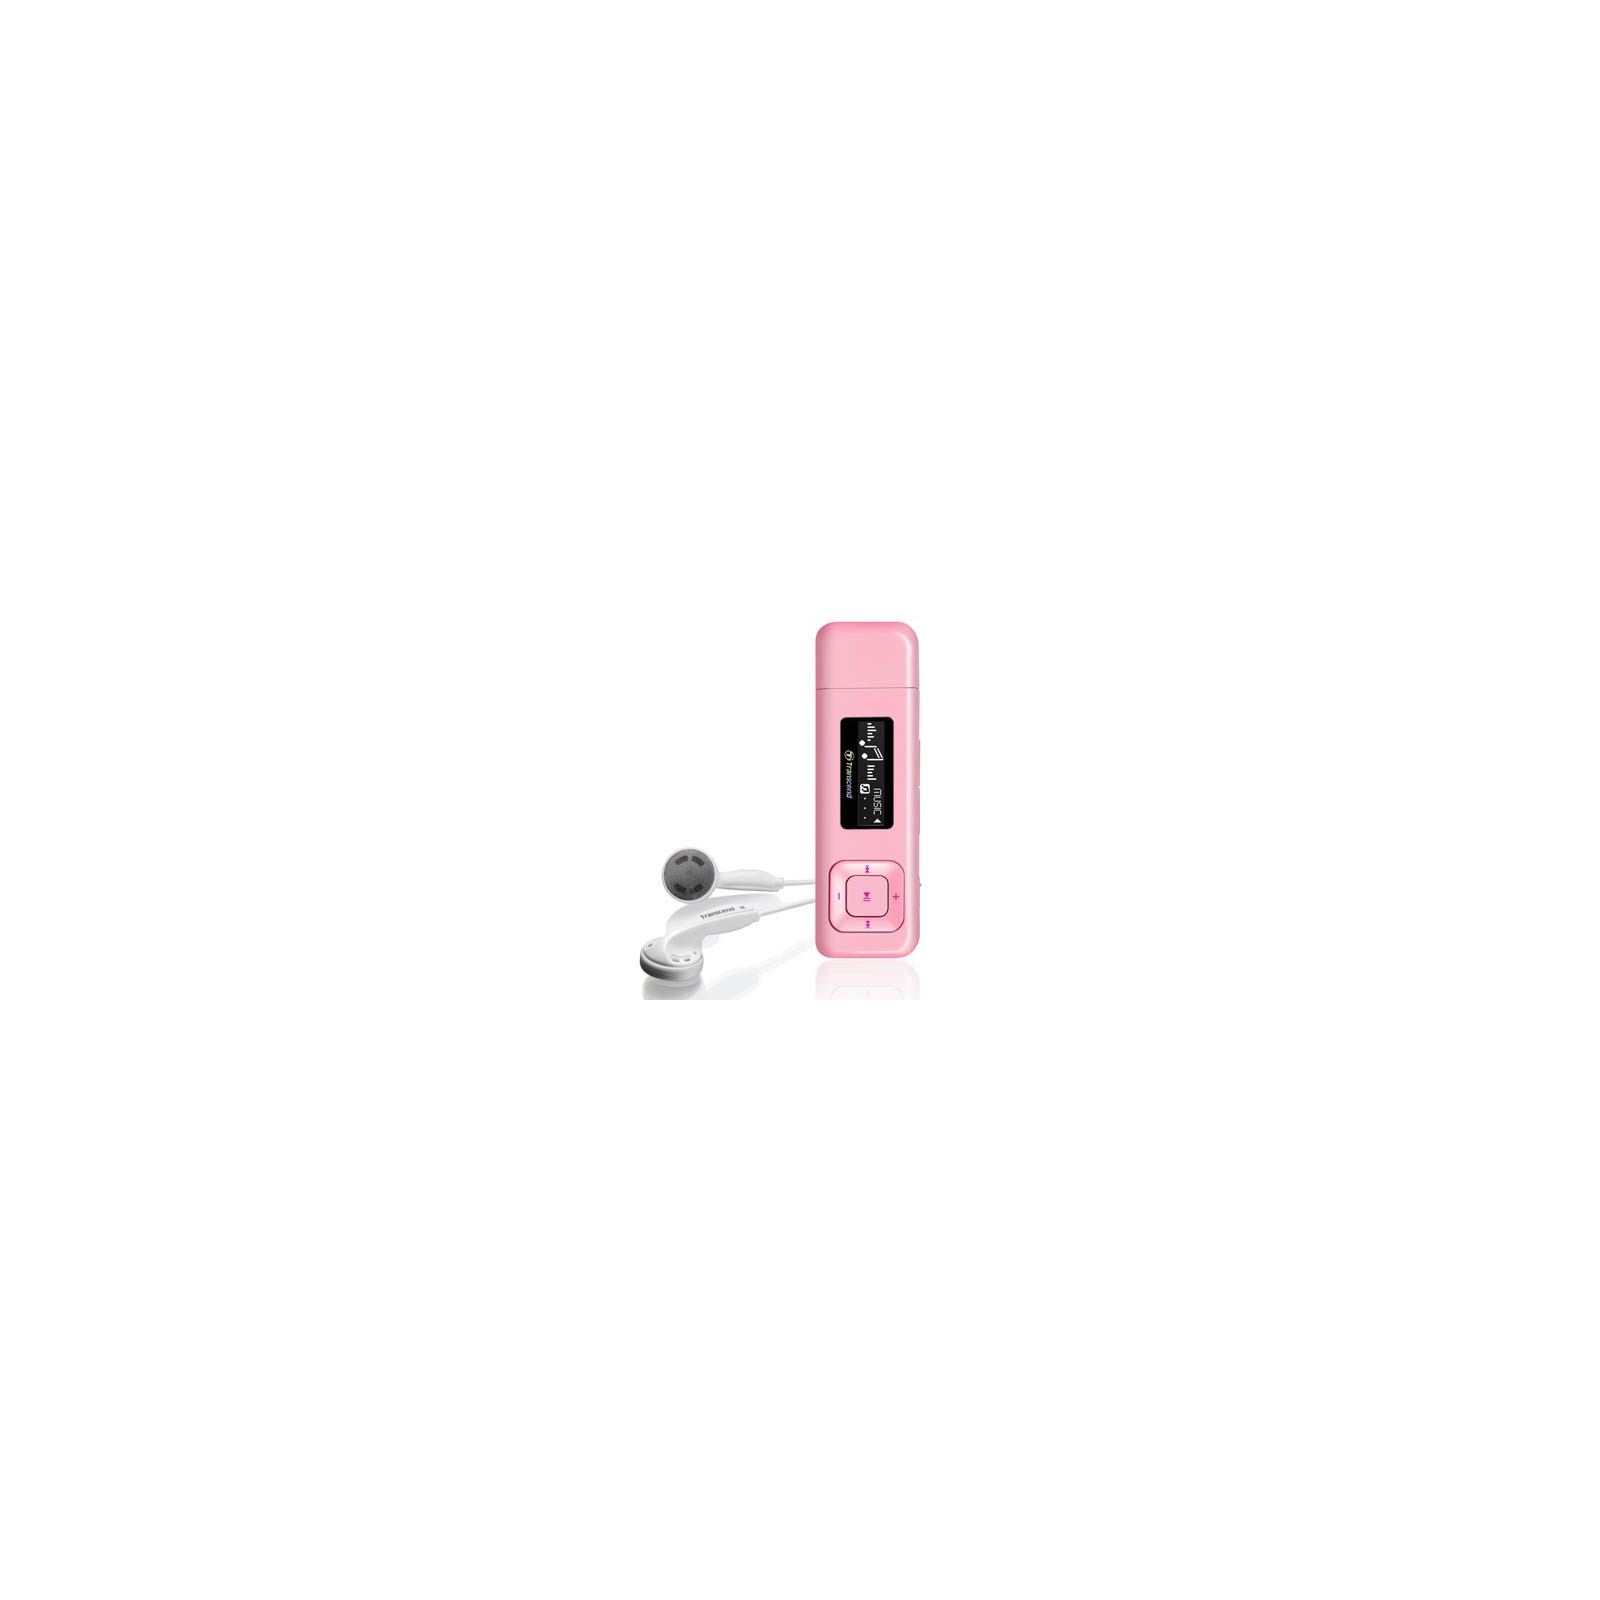 MP3 плеєр Transcend T.sonic 330 8GB Pink (TS8GMP330P)